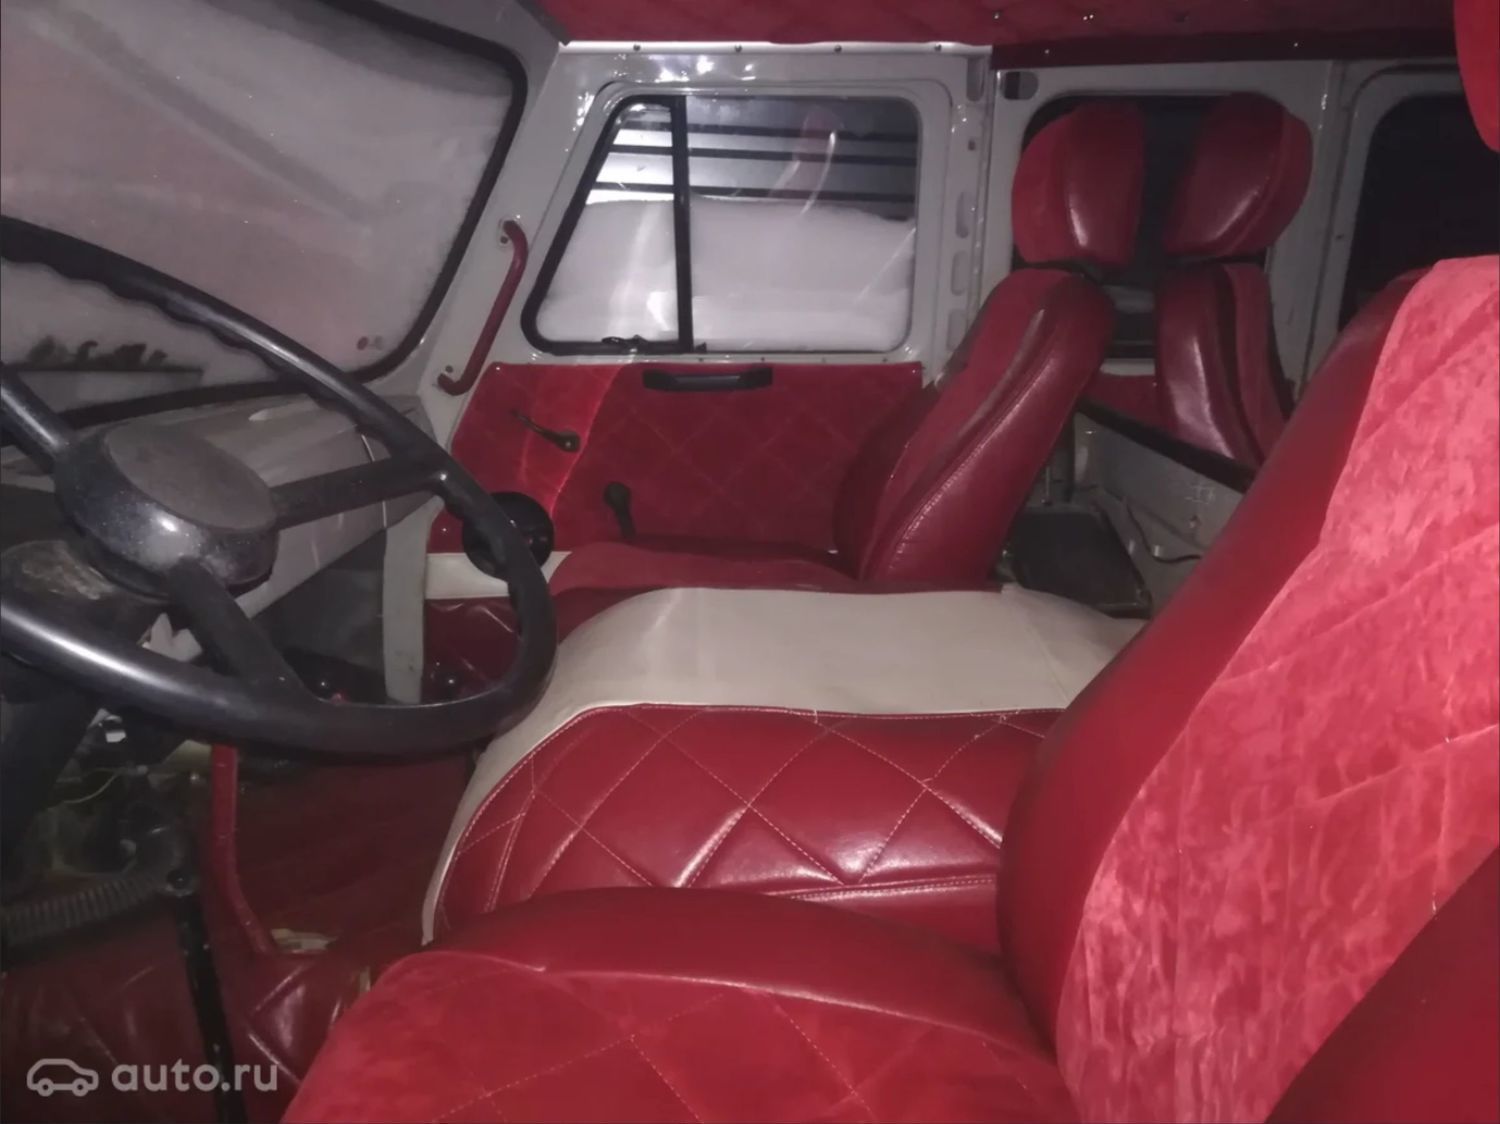 UAZ 452 luxury inside